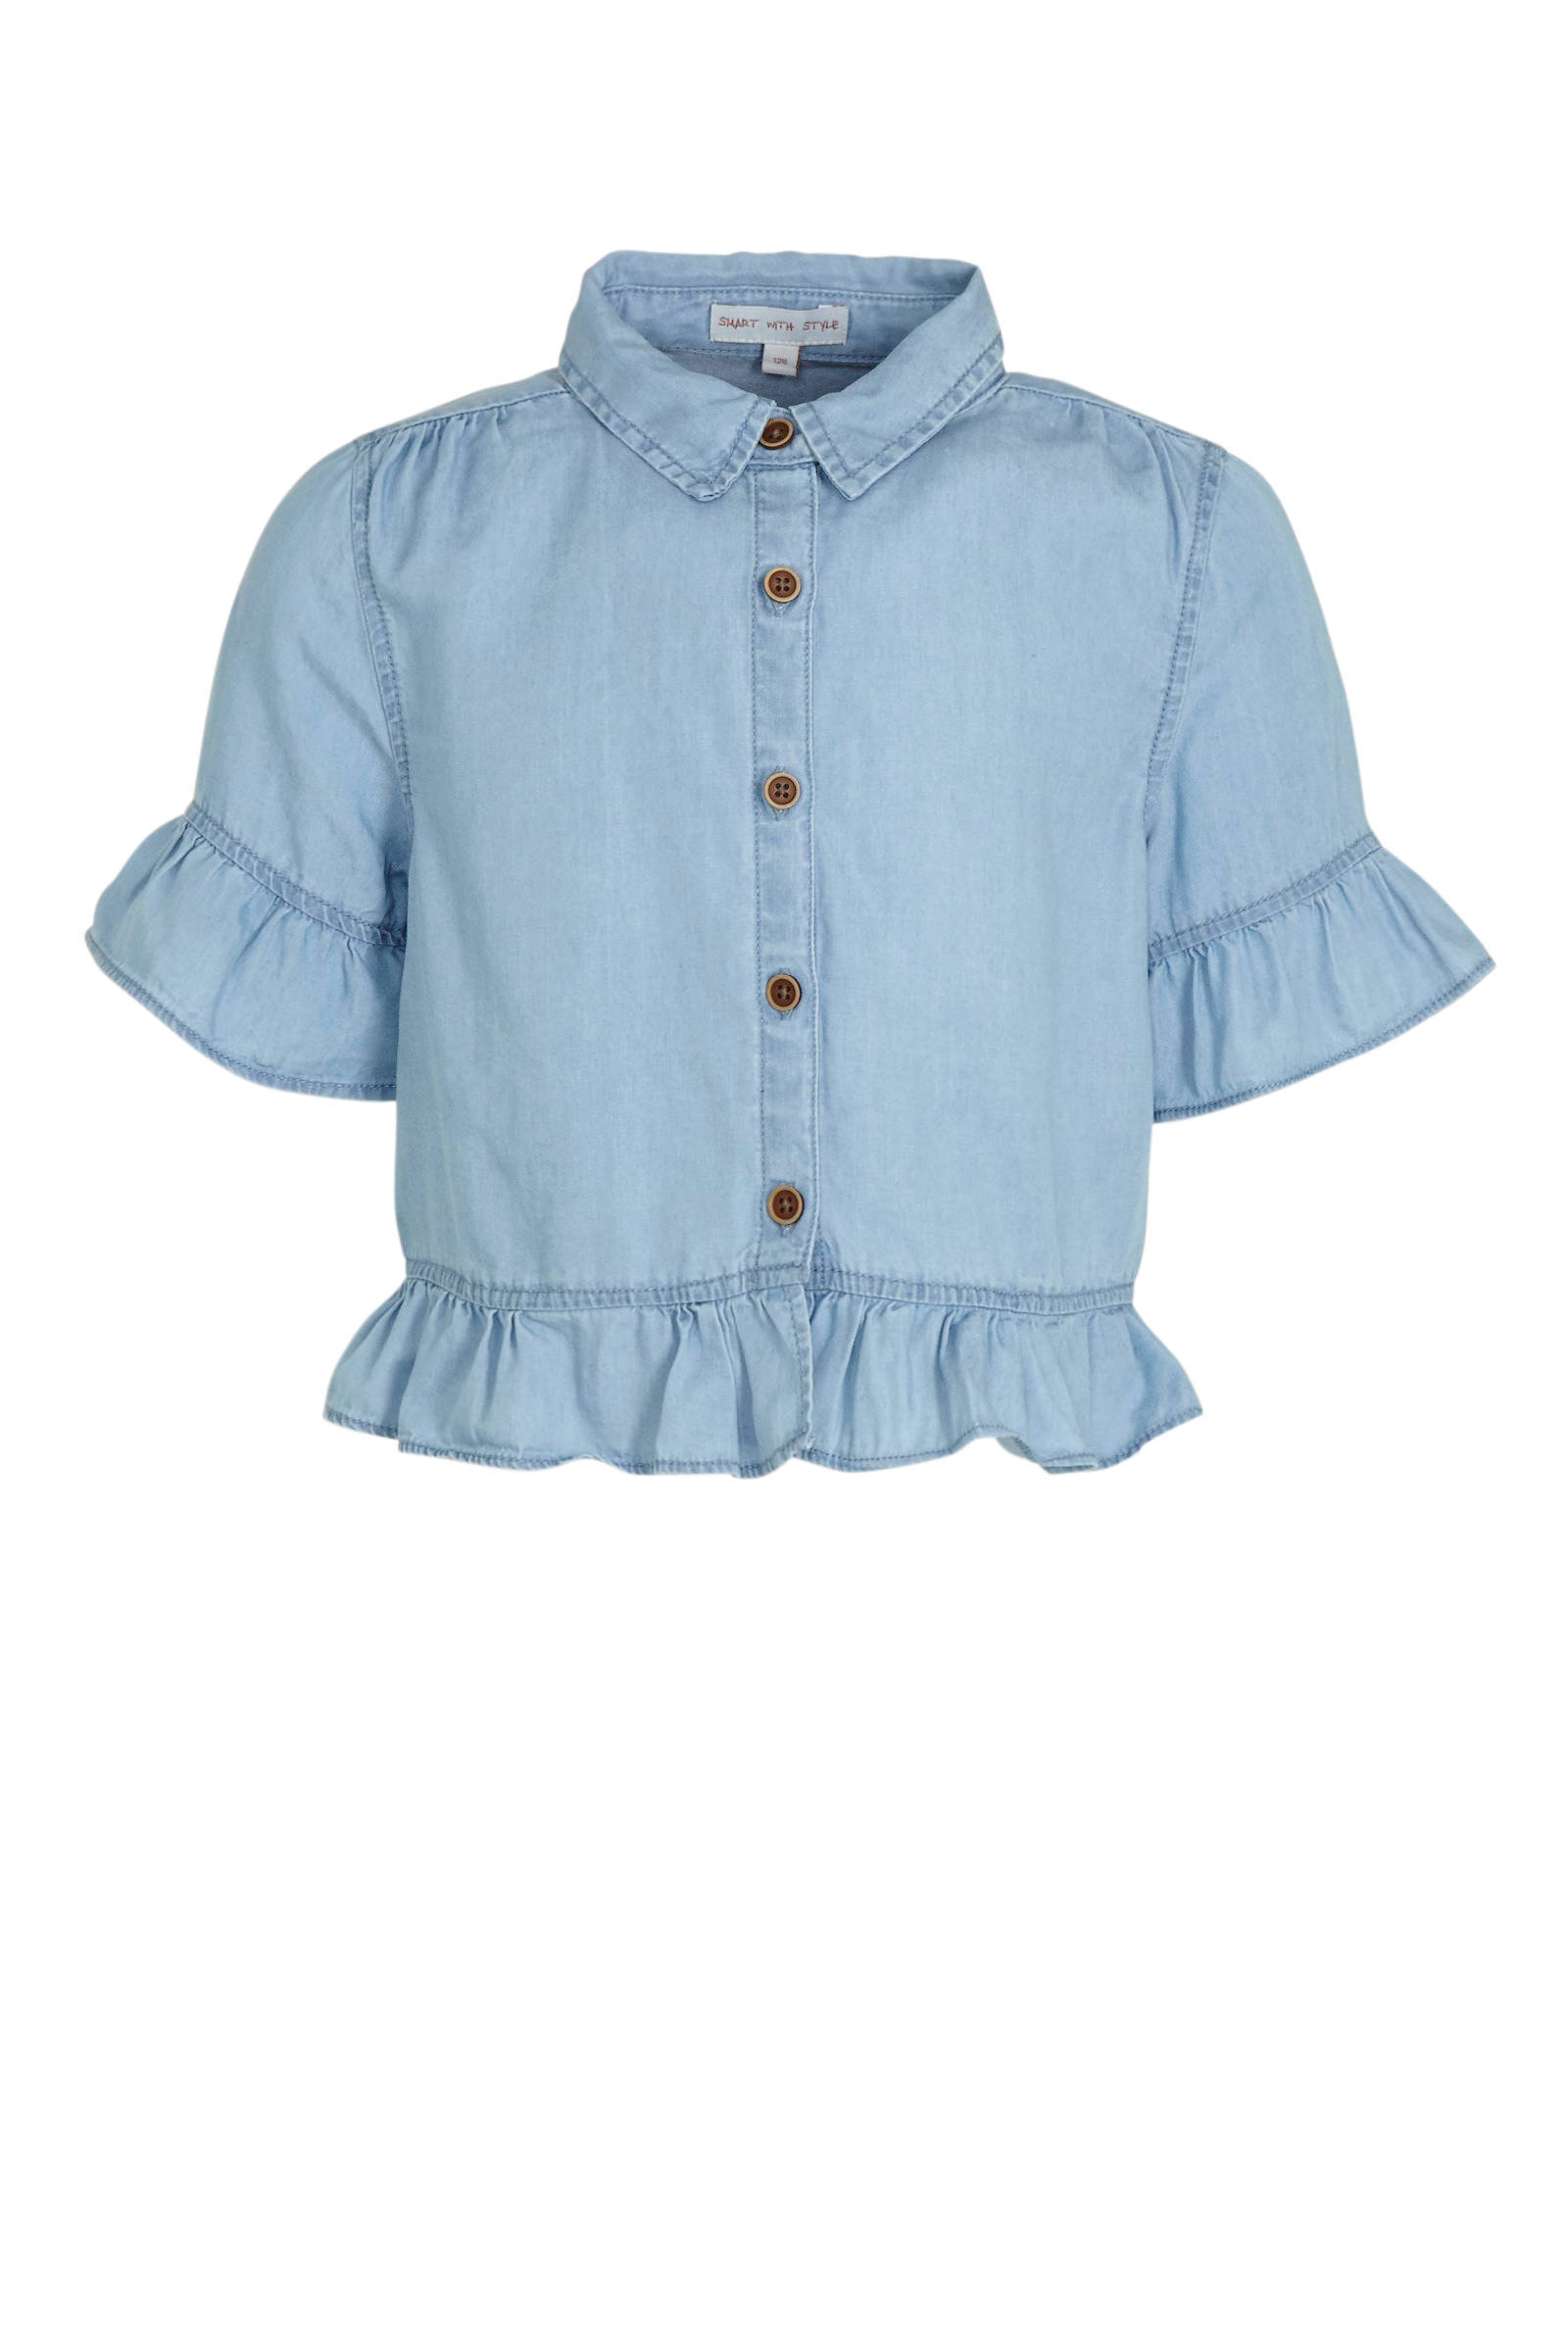 Esprit Ruche blouse blauw zakelijke stijl Mode Blouses Ruche blouses 